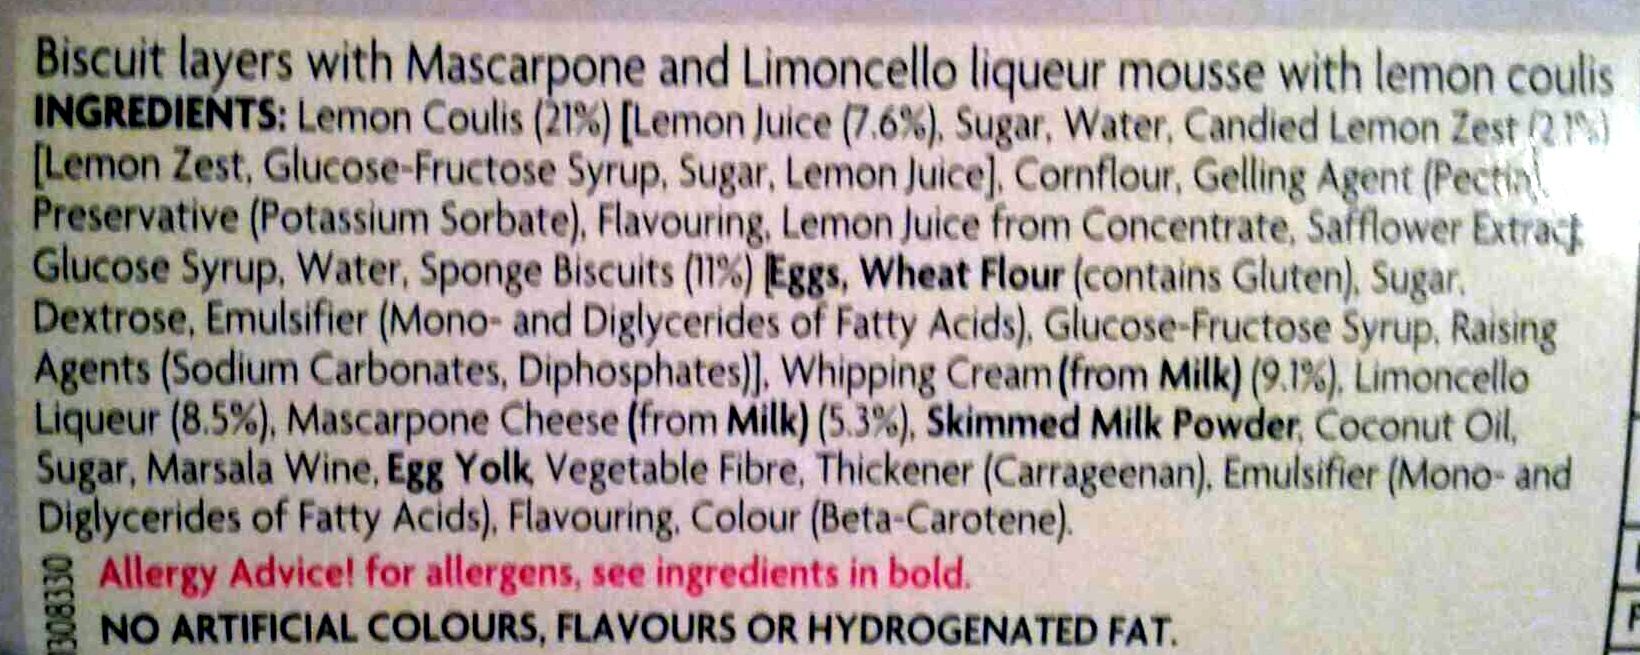 2 limoncello desserts - Ingredients